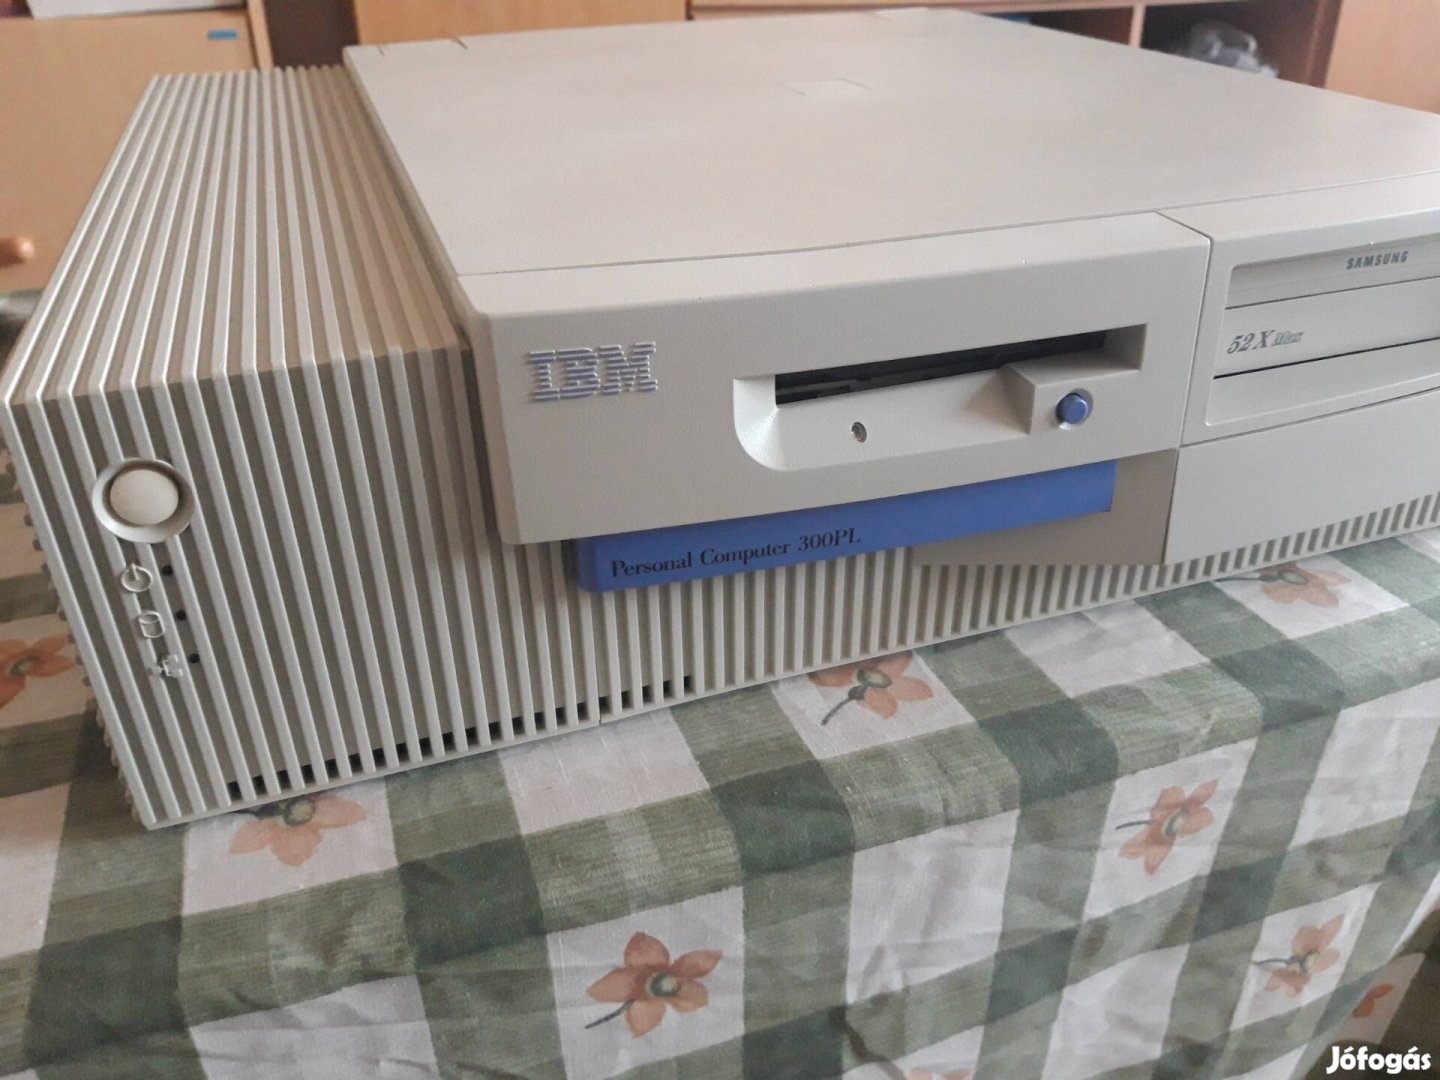 Eladó IBM Pc 300PL